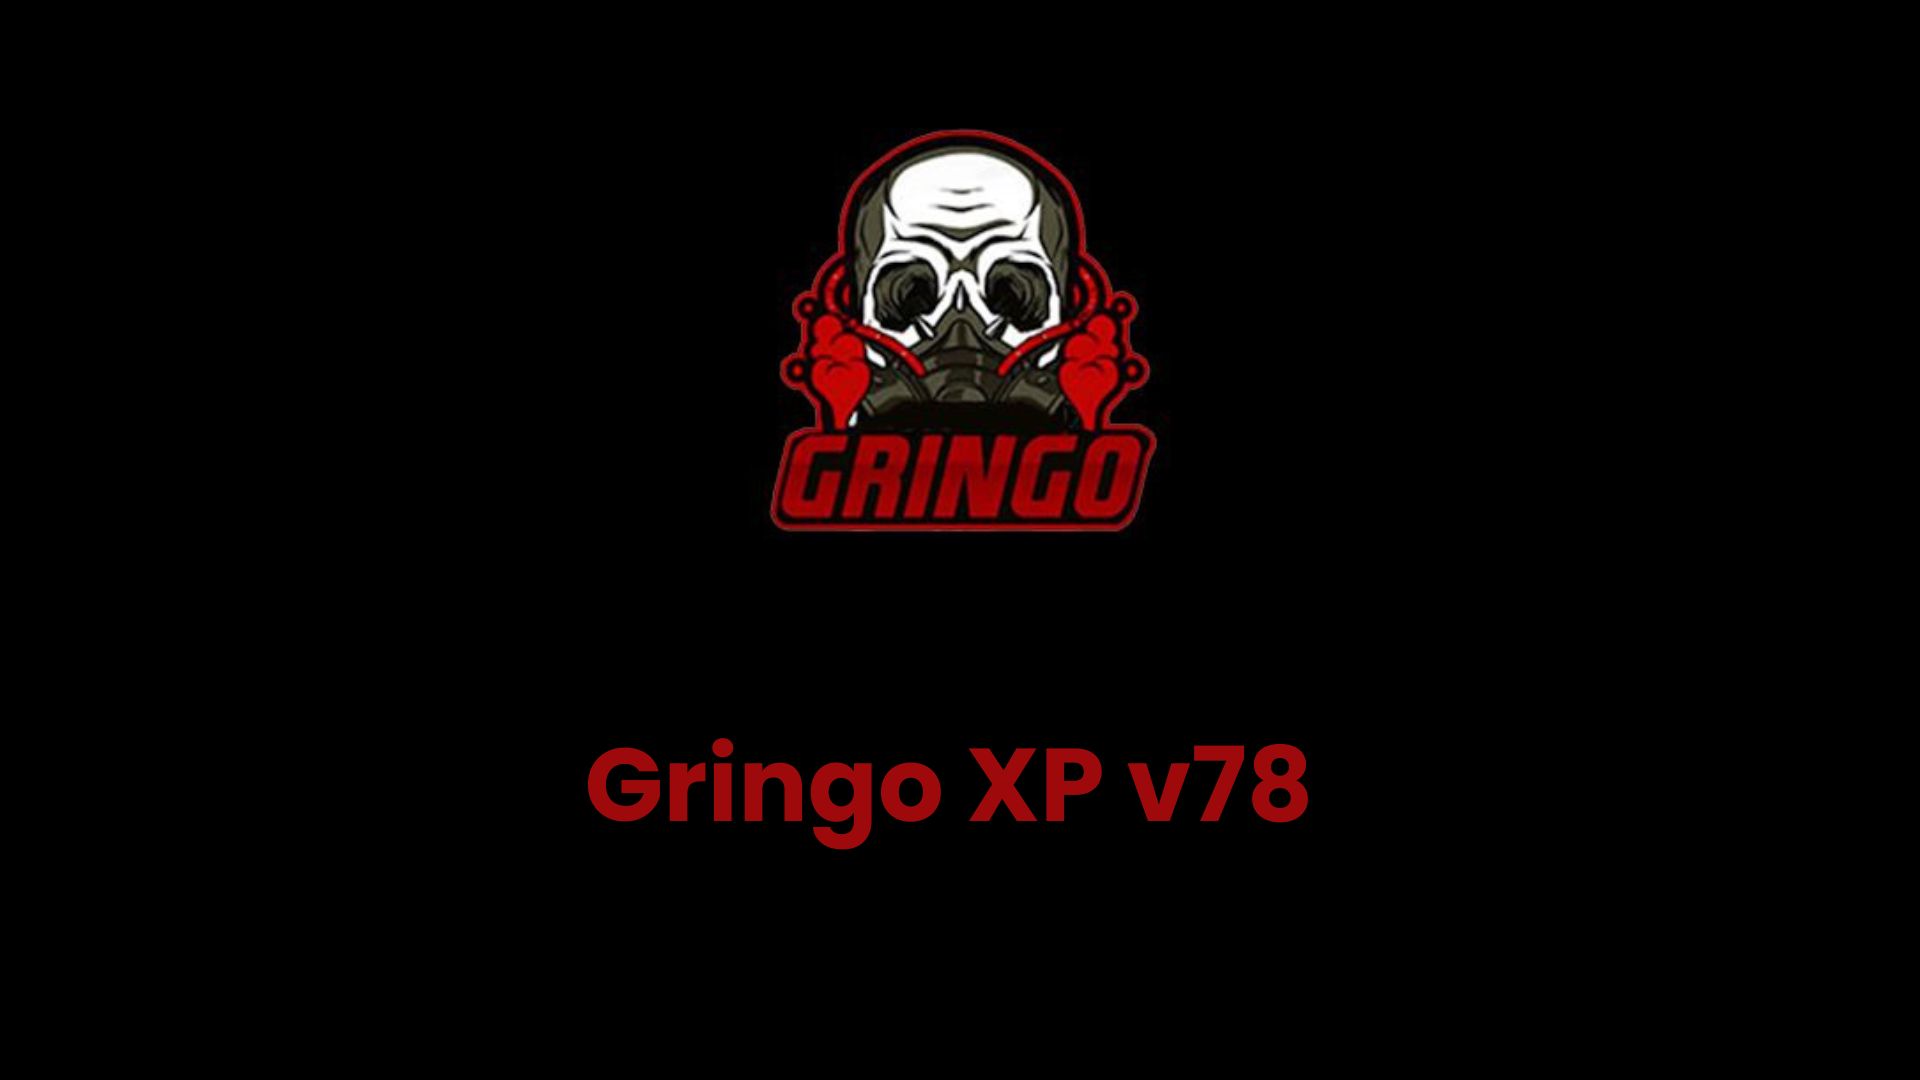 Gringo XP v78